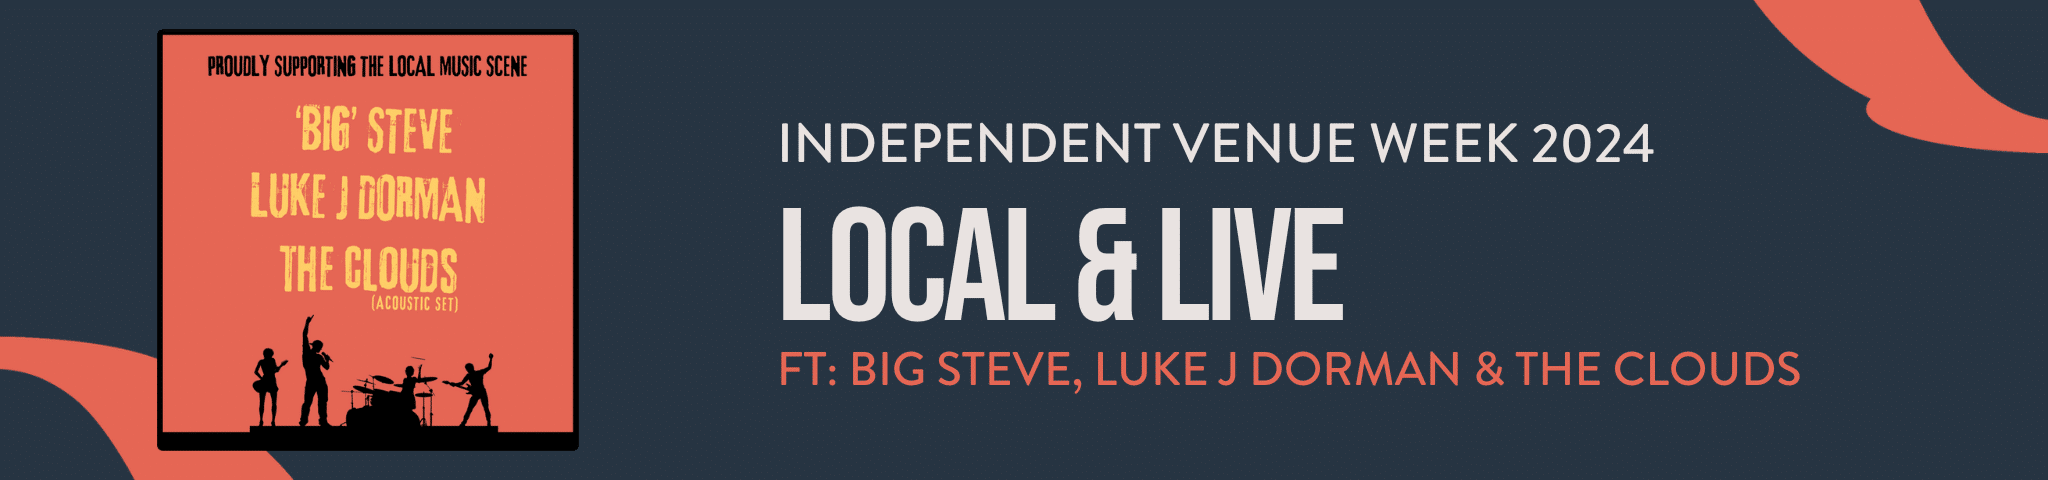 LOCAL & LIVE: BIG STEVE, LUKE J DORMAN, THE CLOUDS – 29TH JANUARY 2024